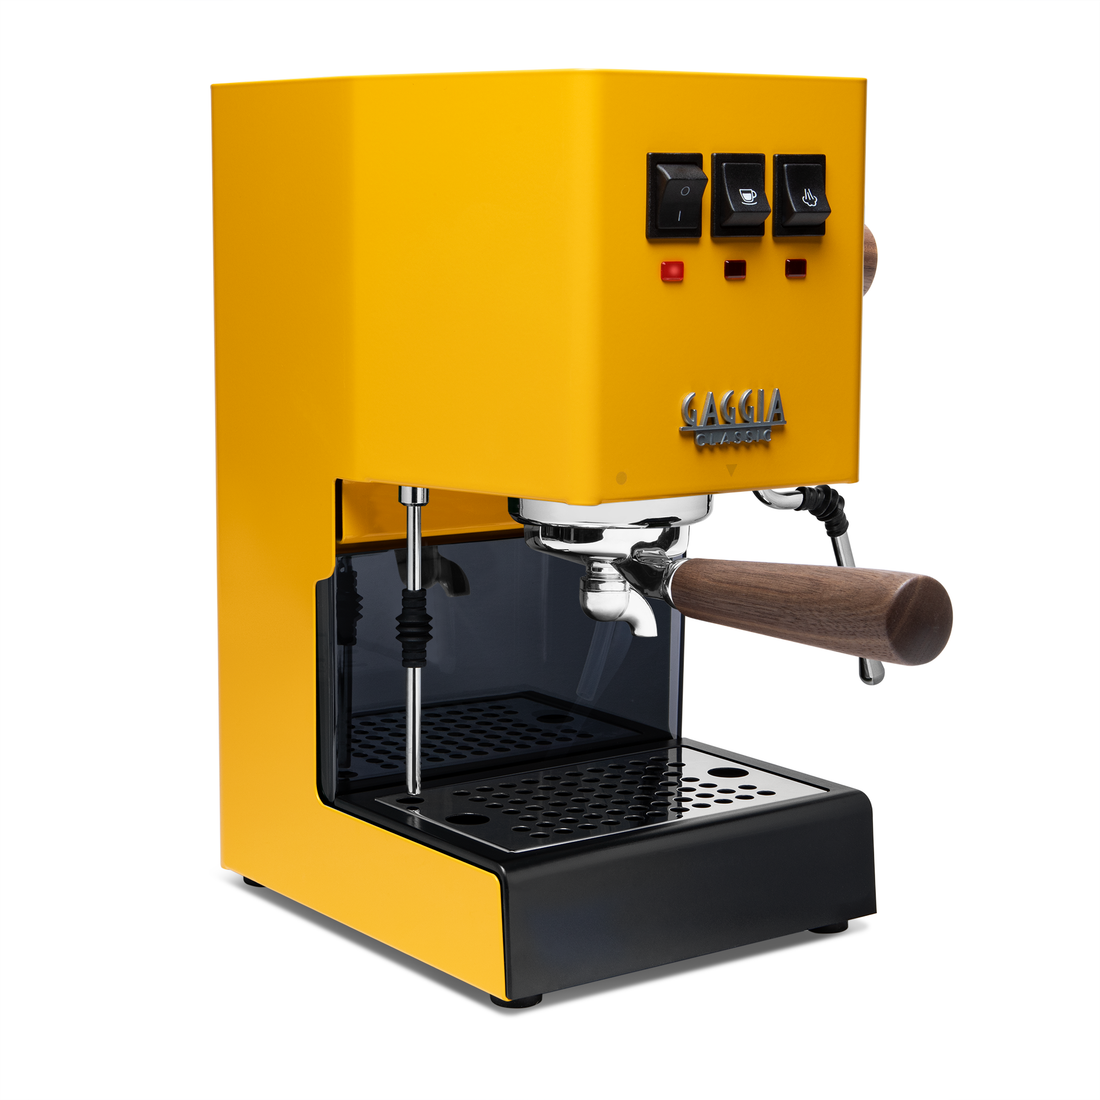 Gaggia Classic Evo Pro Espresso Machine in Sunshine Yellow with Walnut